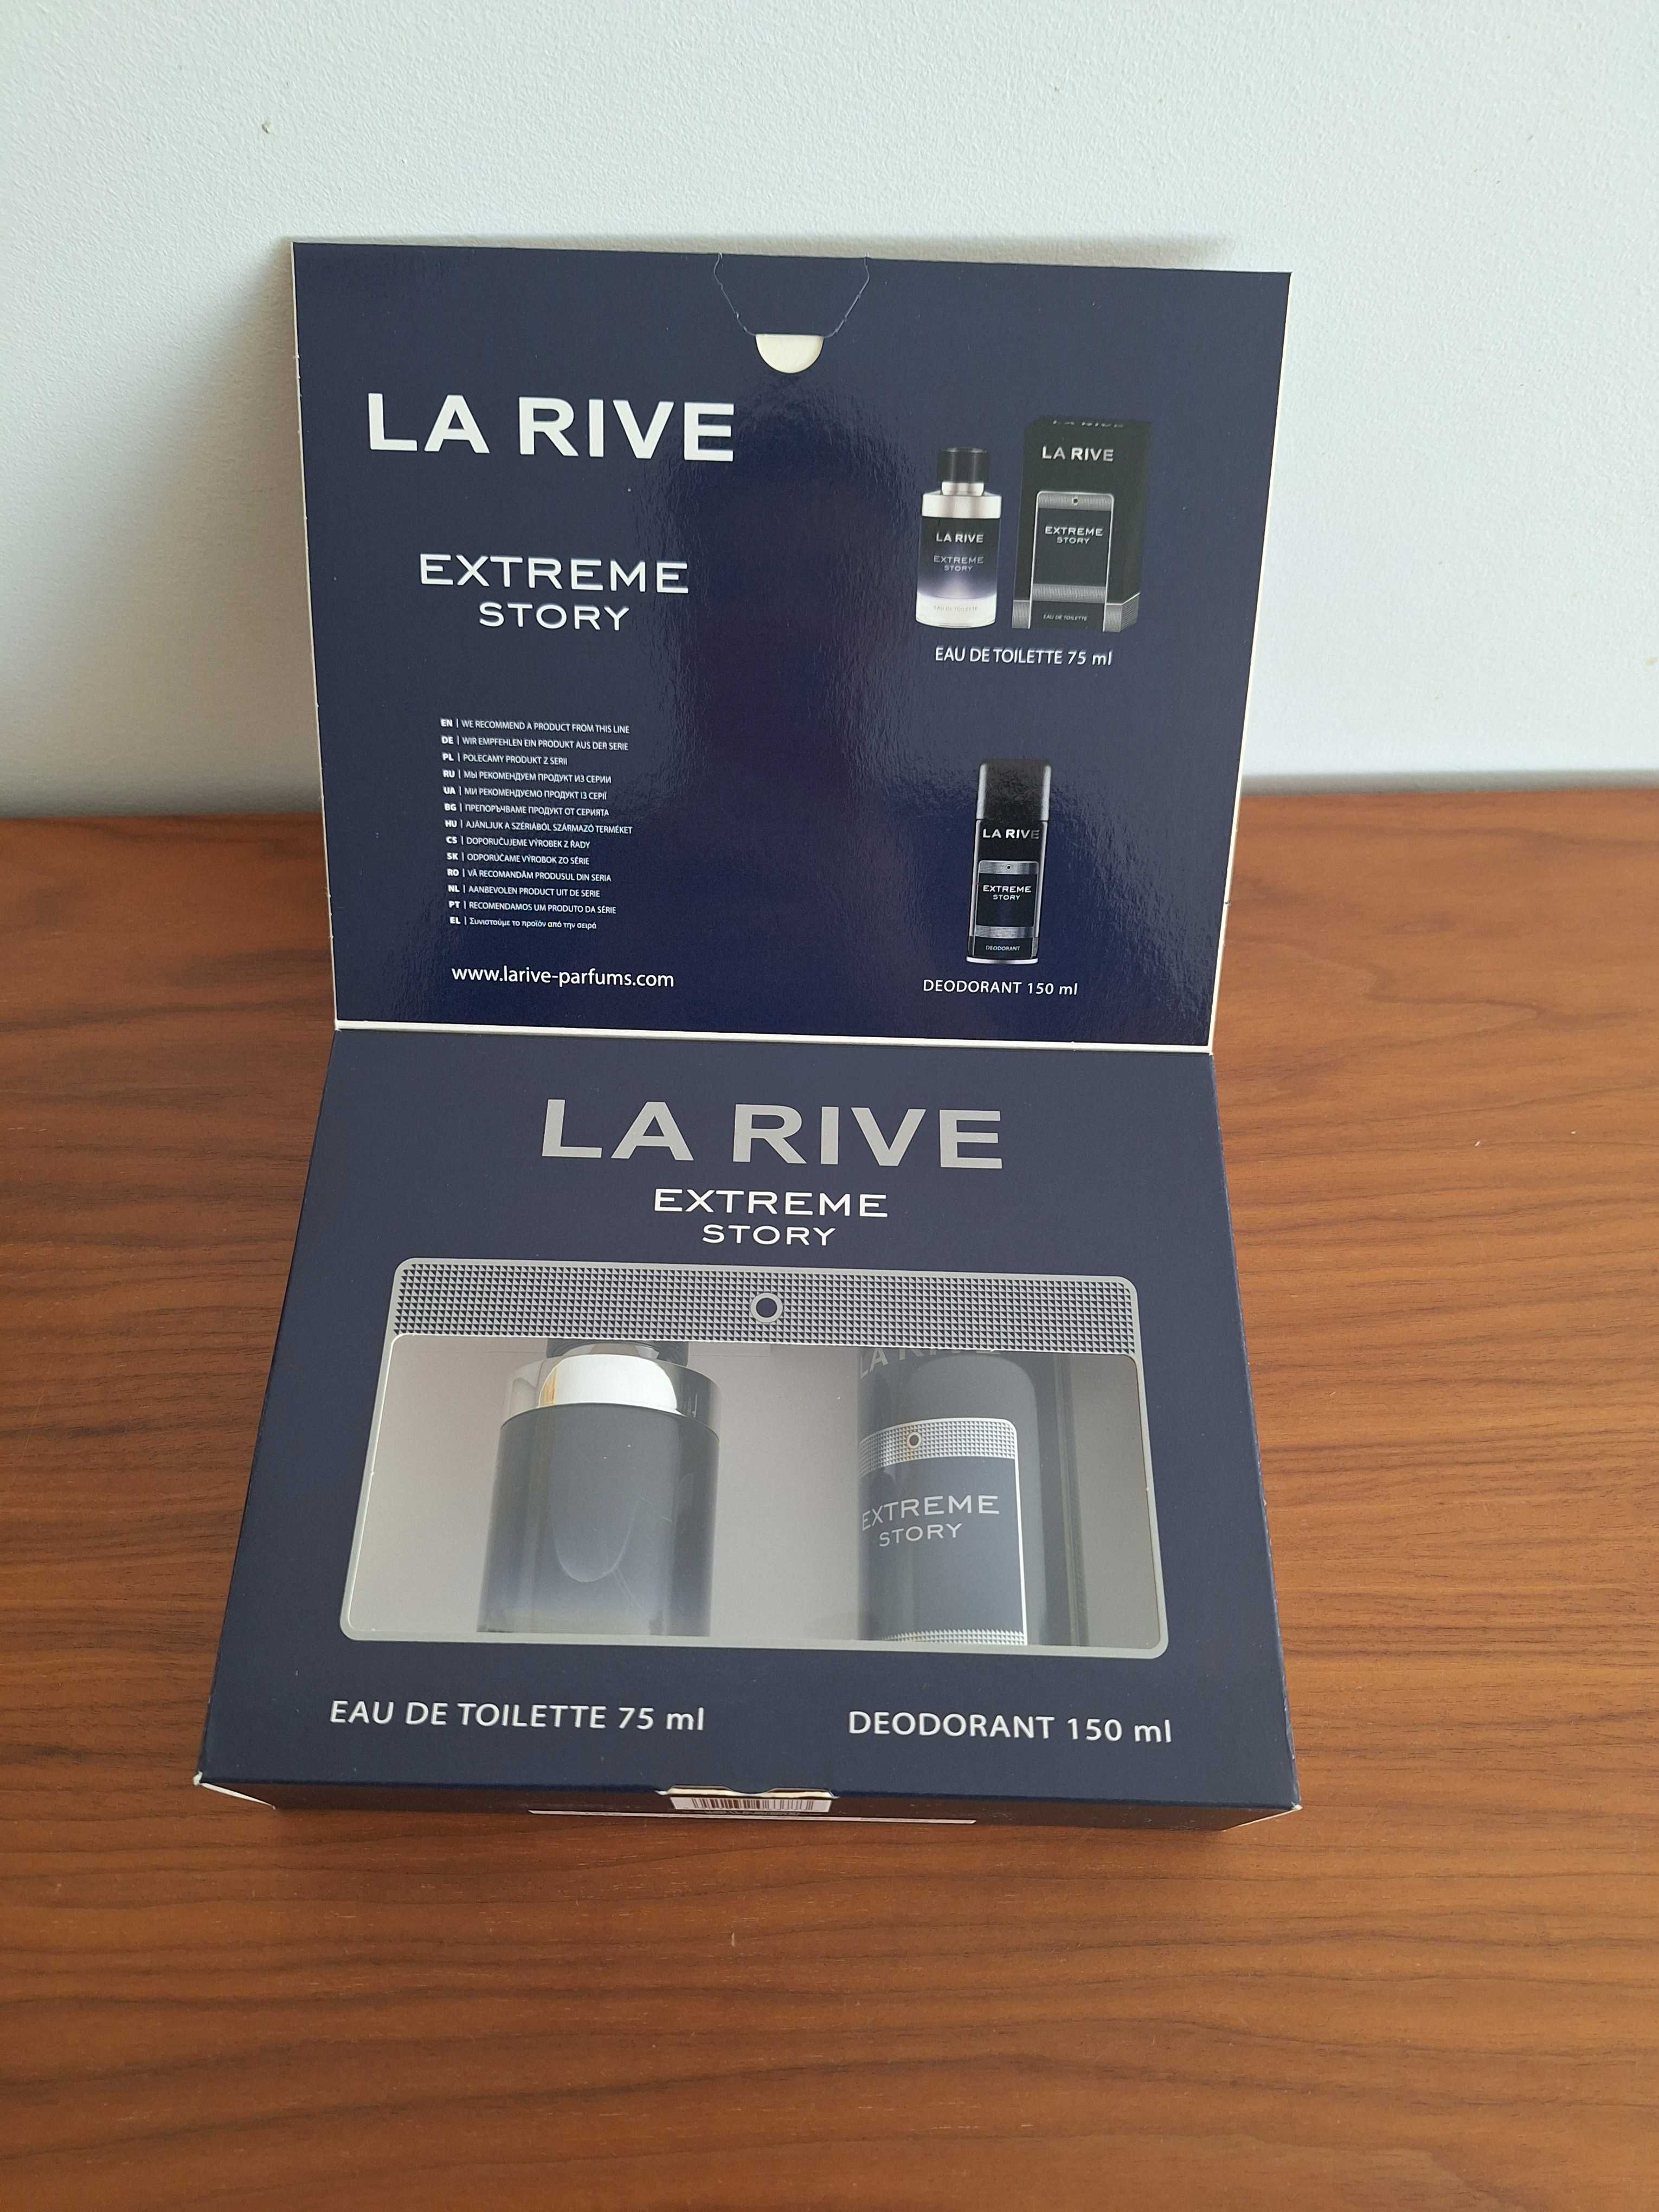 La Rive Extreme Story EAU de Toilette 75ml e Deidorant 150ml